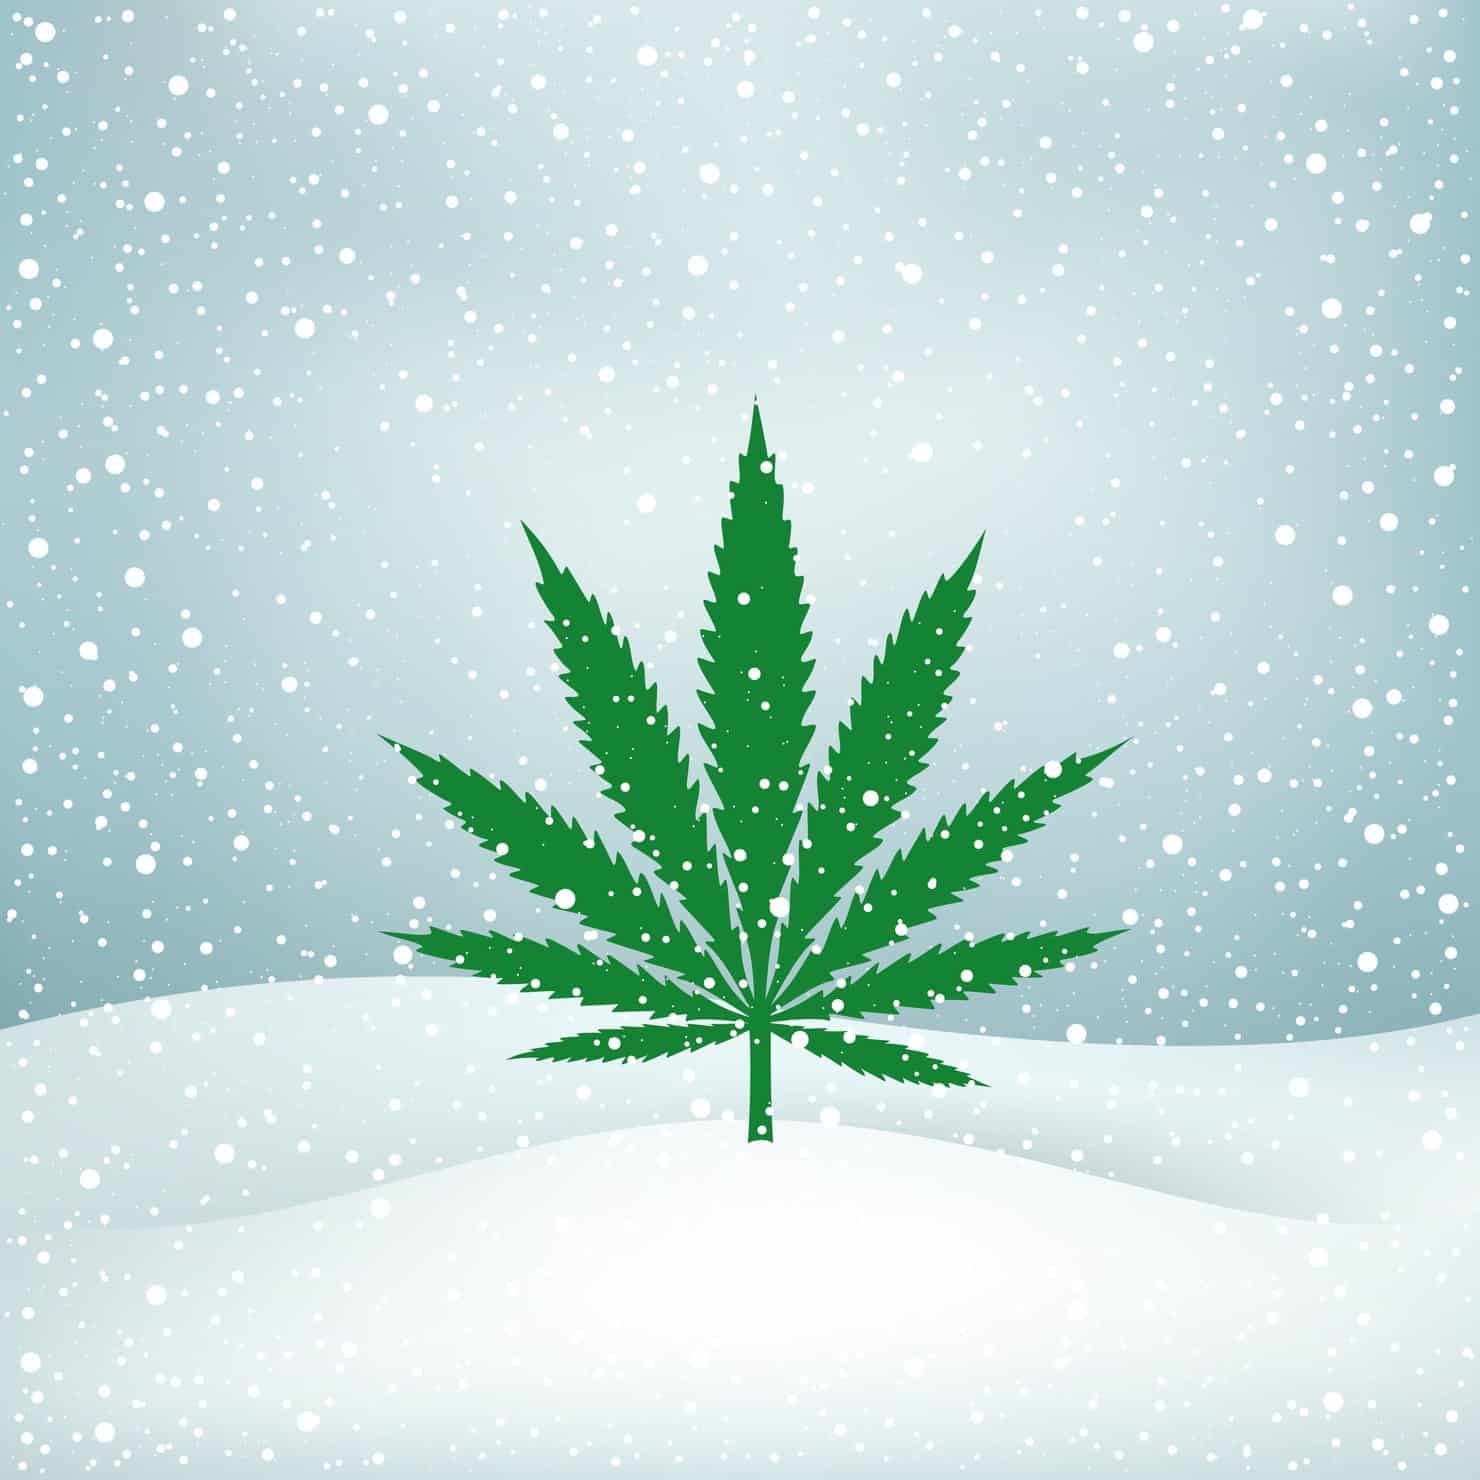 Growing Healthy Marijuana Through The Winter. Snow falling on a cannabis plant. 